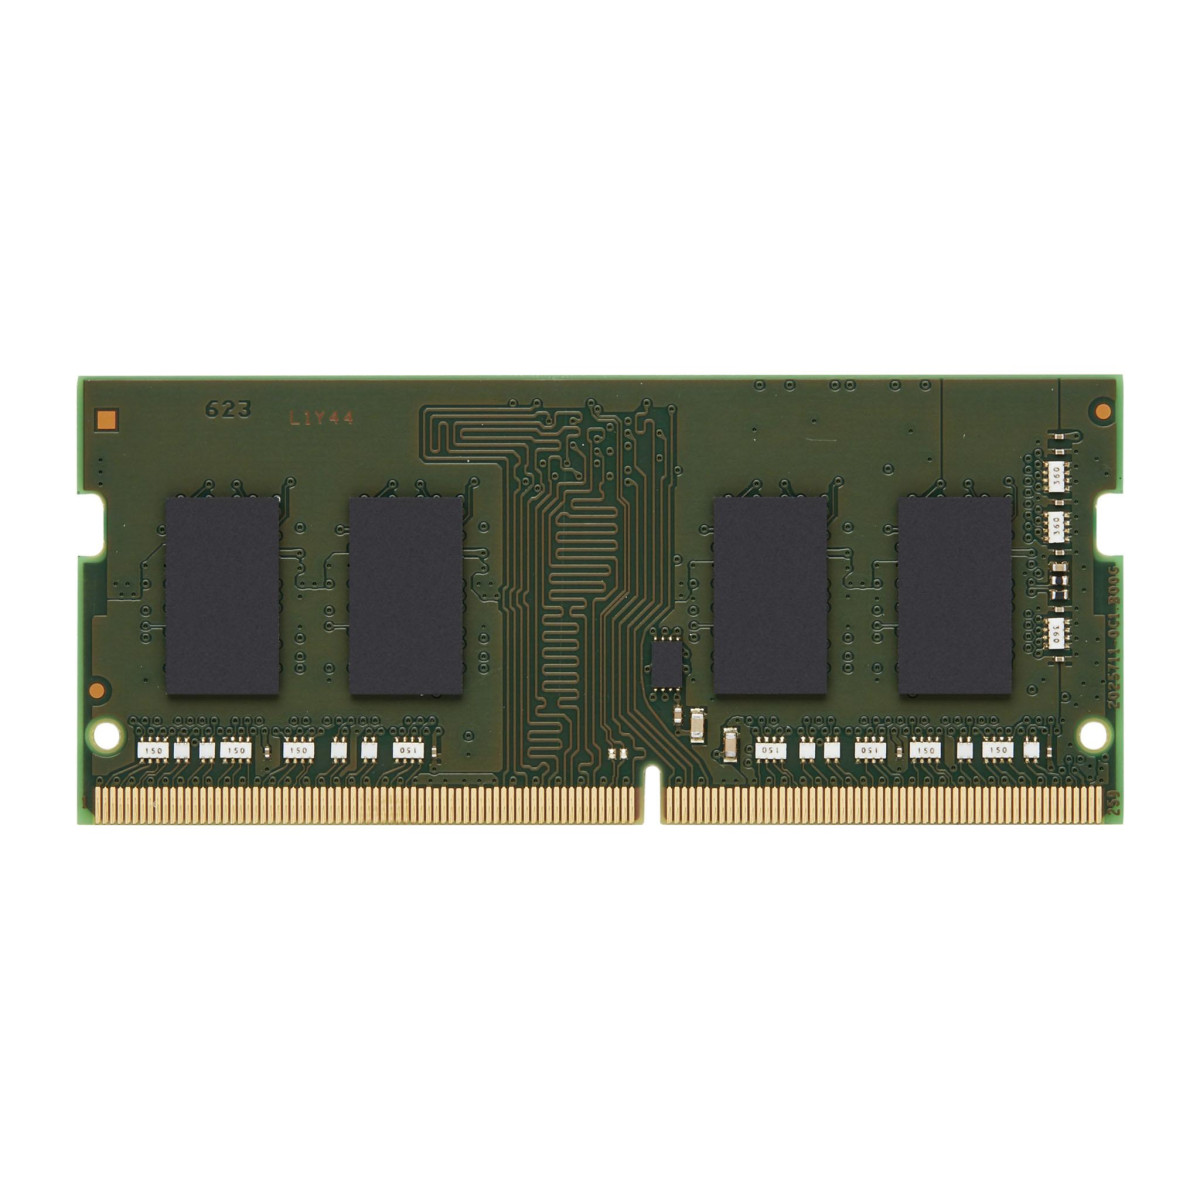 8GB DDR4 3200MHz Single Rank SODIMM